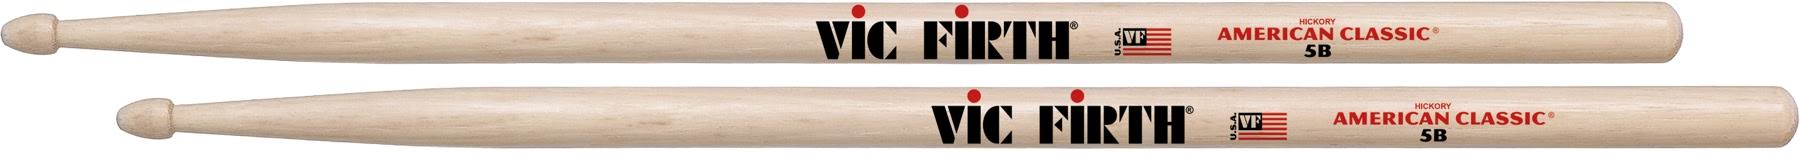 Vic Firth American Classic Wood Tip Drum Sticks - Hickory, 5B